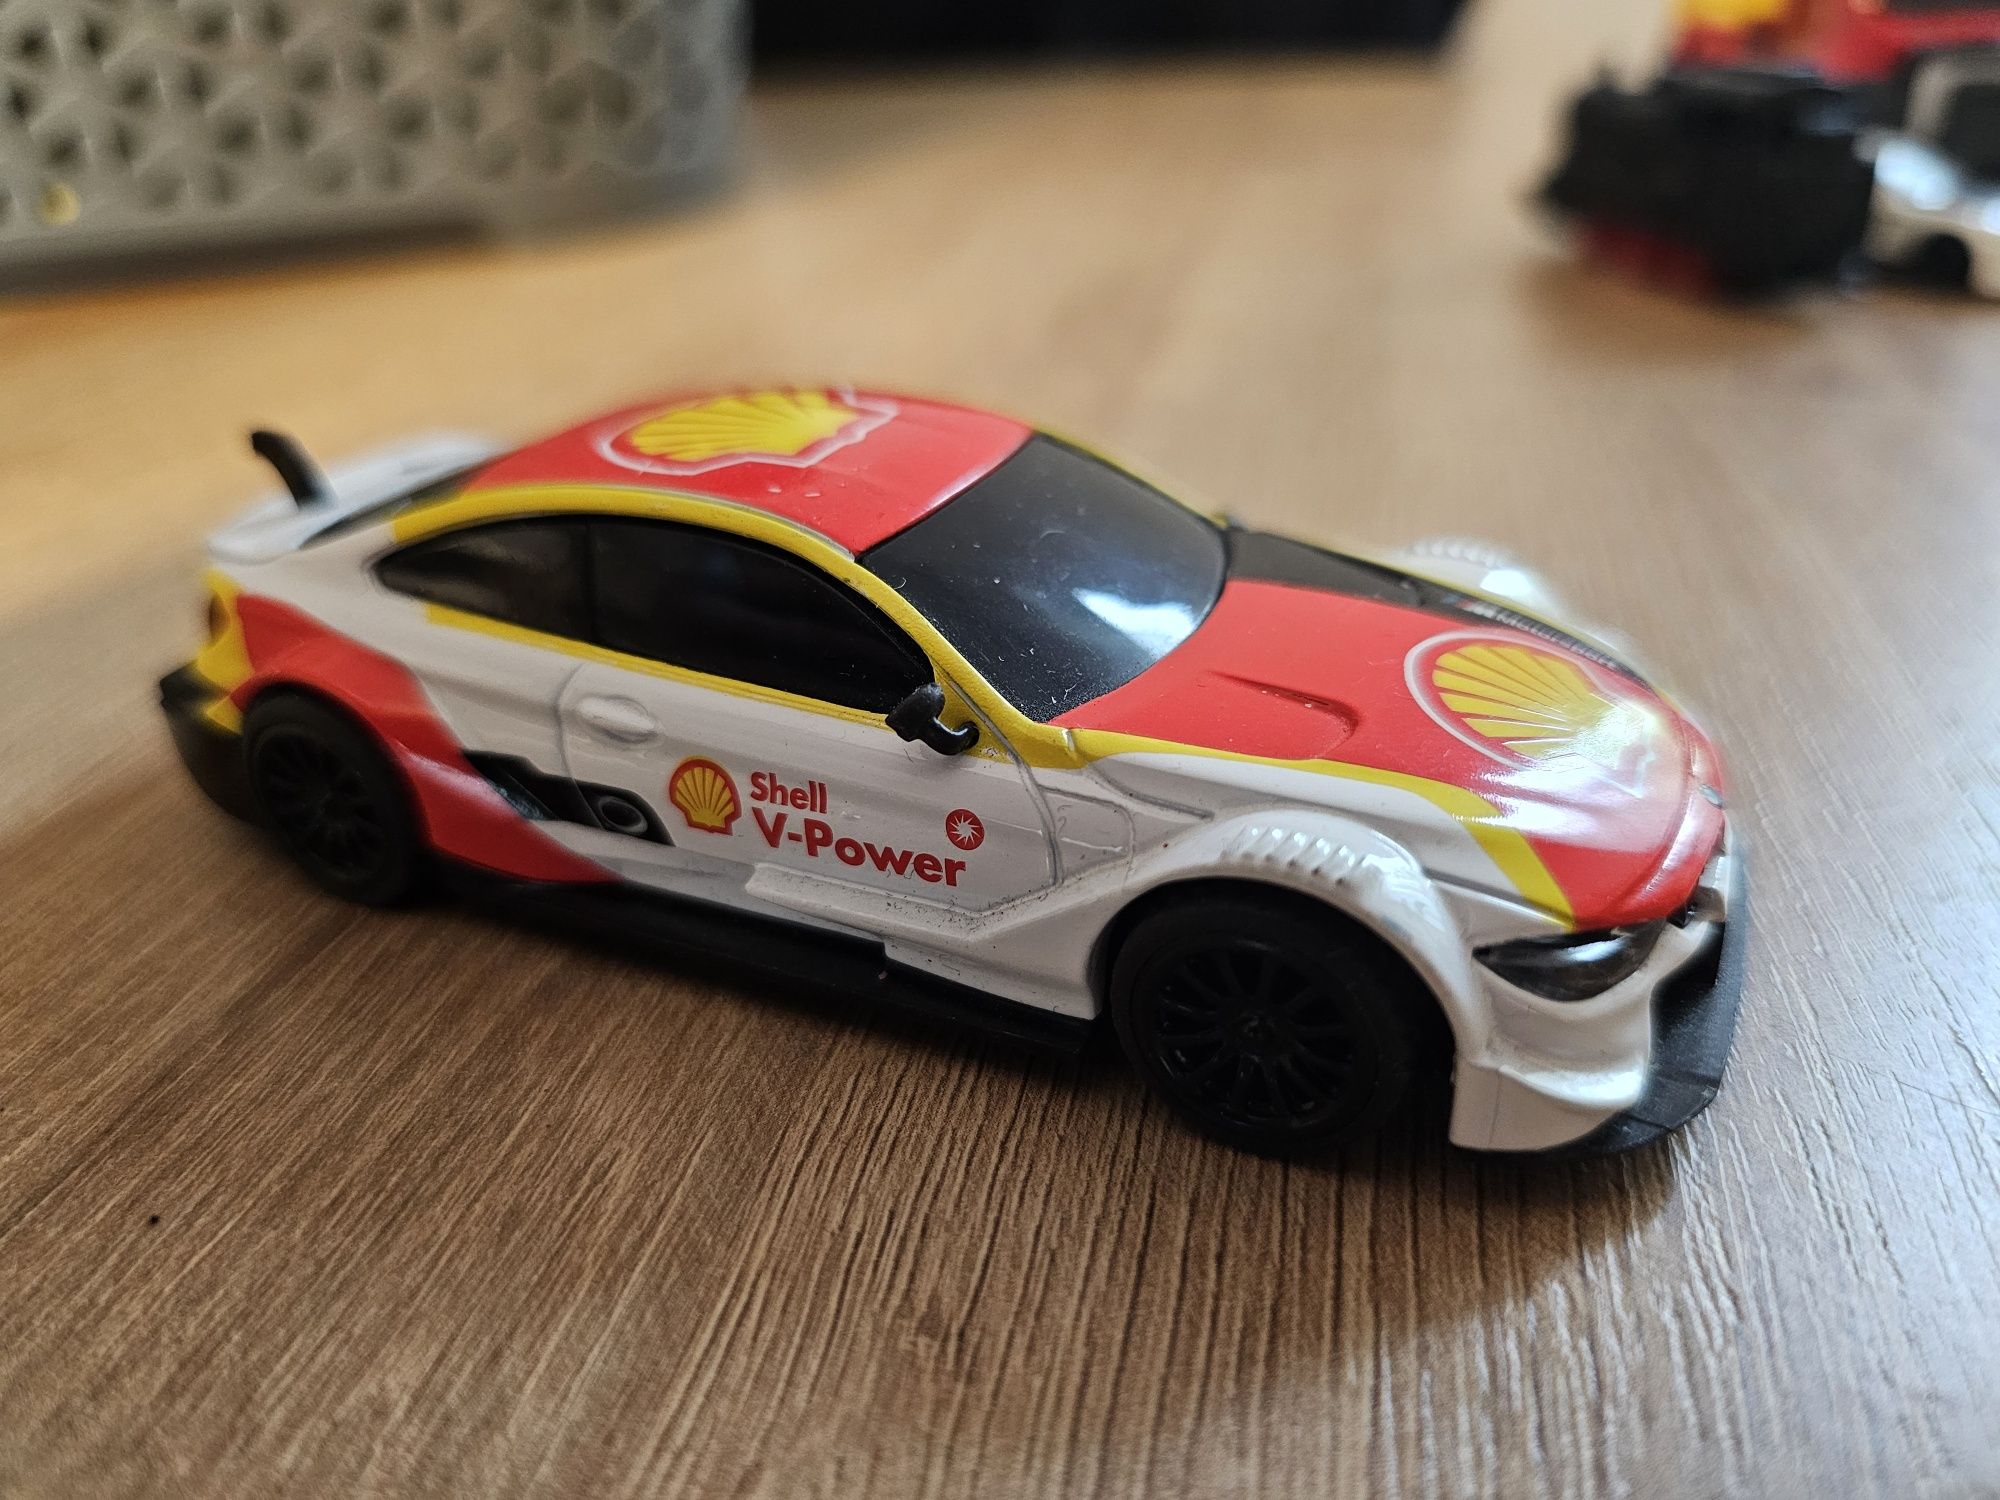 Shell samochodziki auto